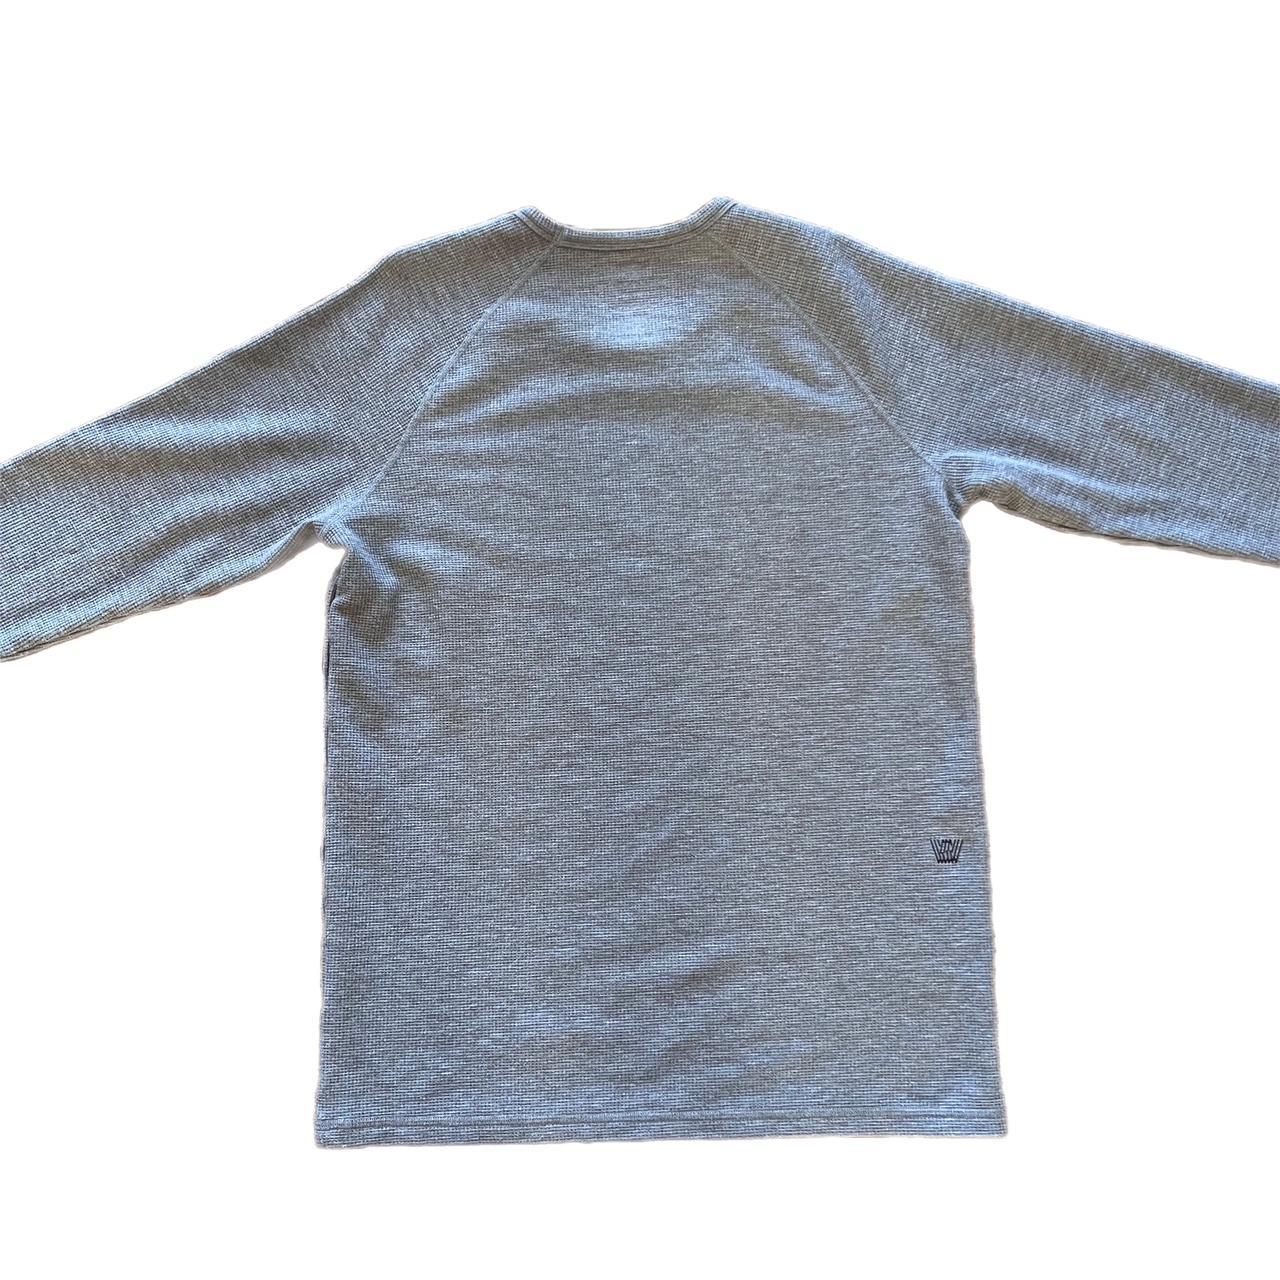 Mack Weldon Men's Grey and Brown Shirt (3)